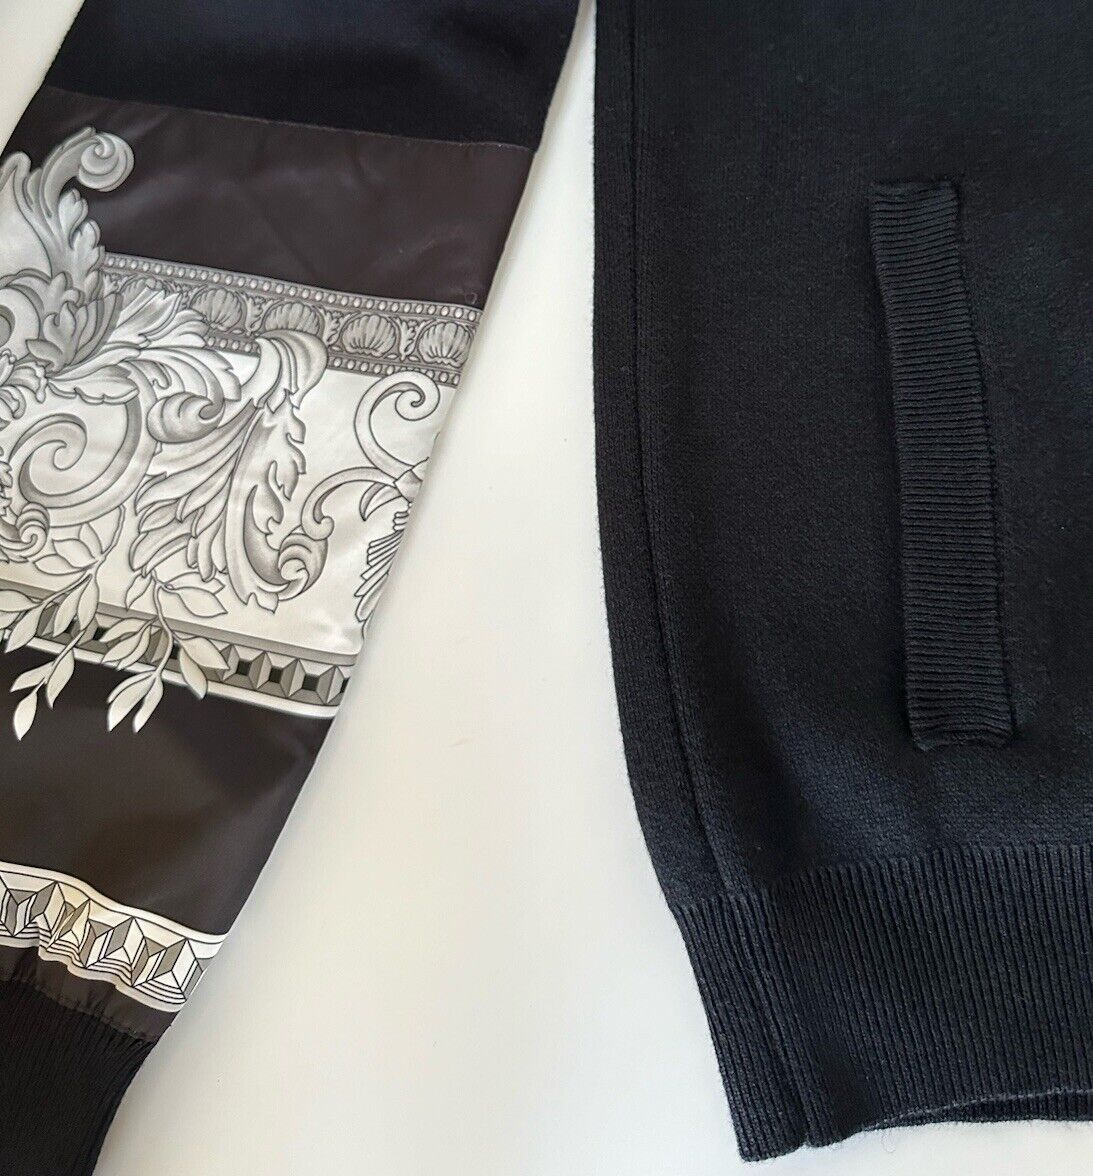 NWT $1750 Versace Renaissance Mens Cotton/Wool Knit Jacket Black 54 1012544